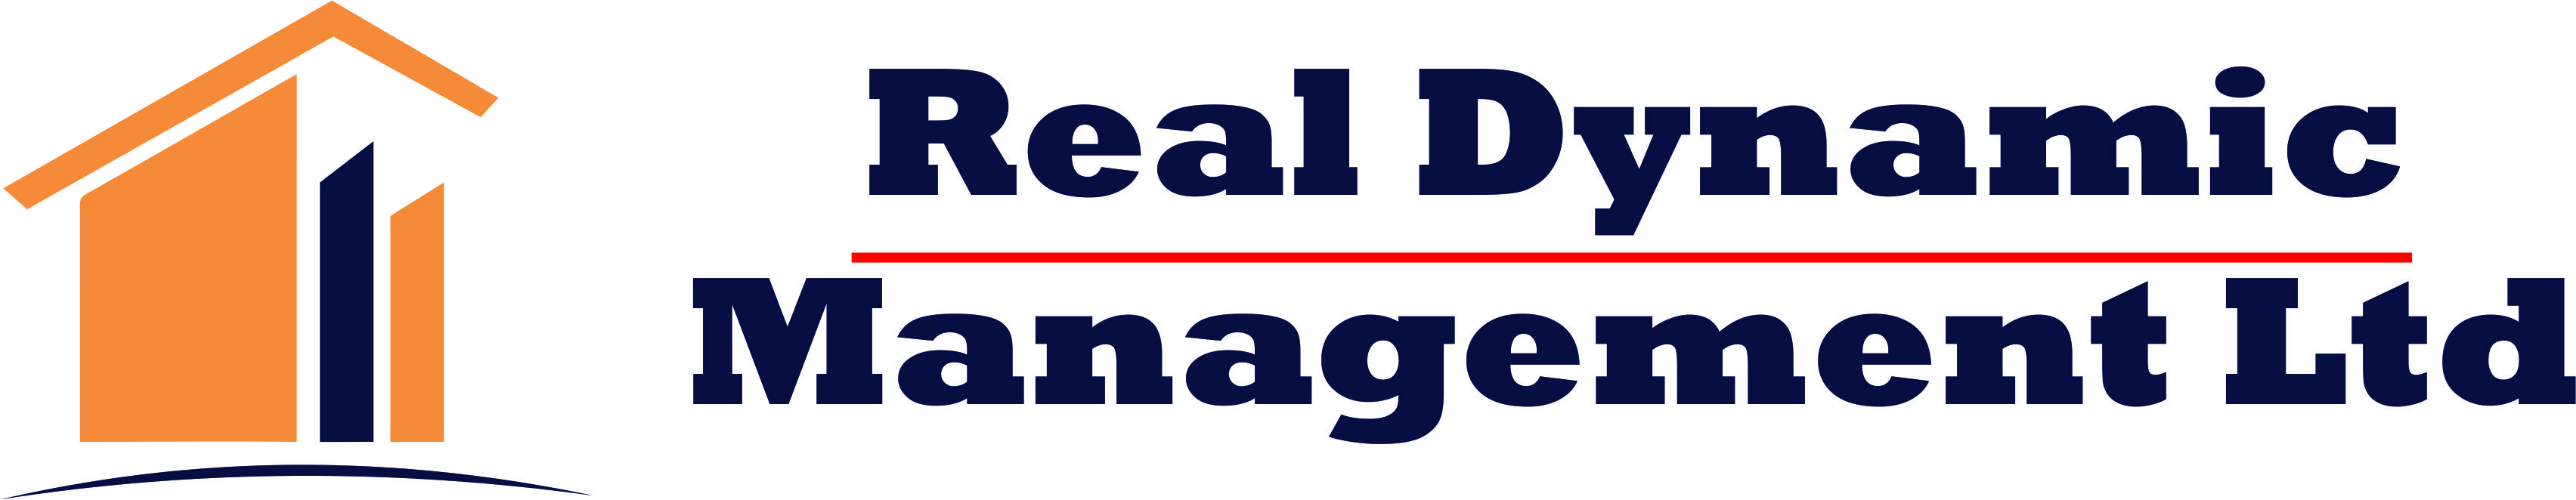 Real Dynamic Management Ltd